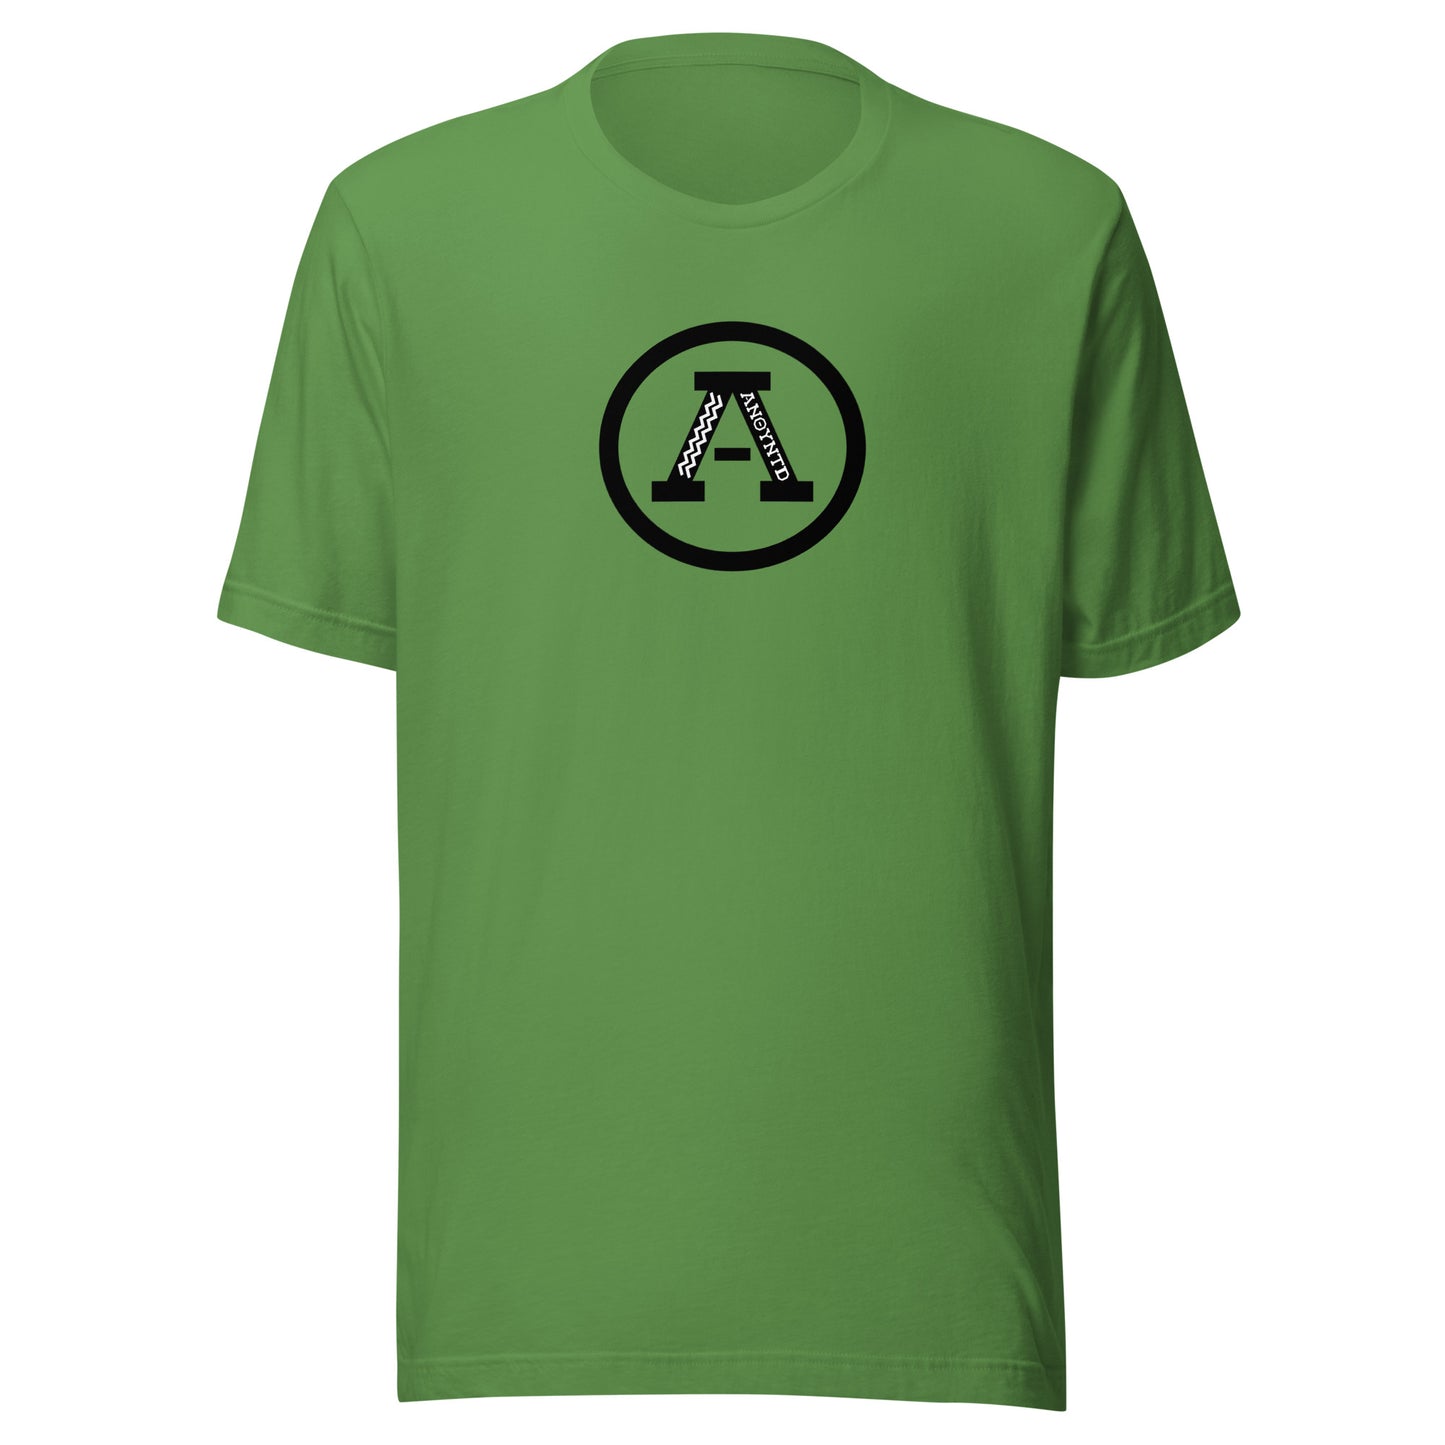 ANOYNTD Letterman (Blk) Unisex t-shirt